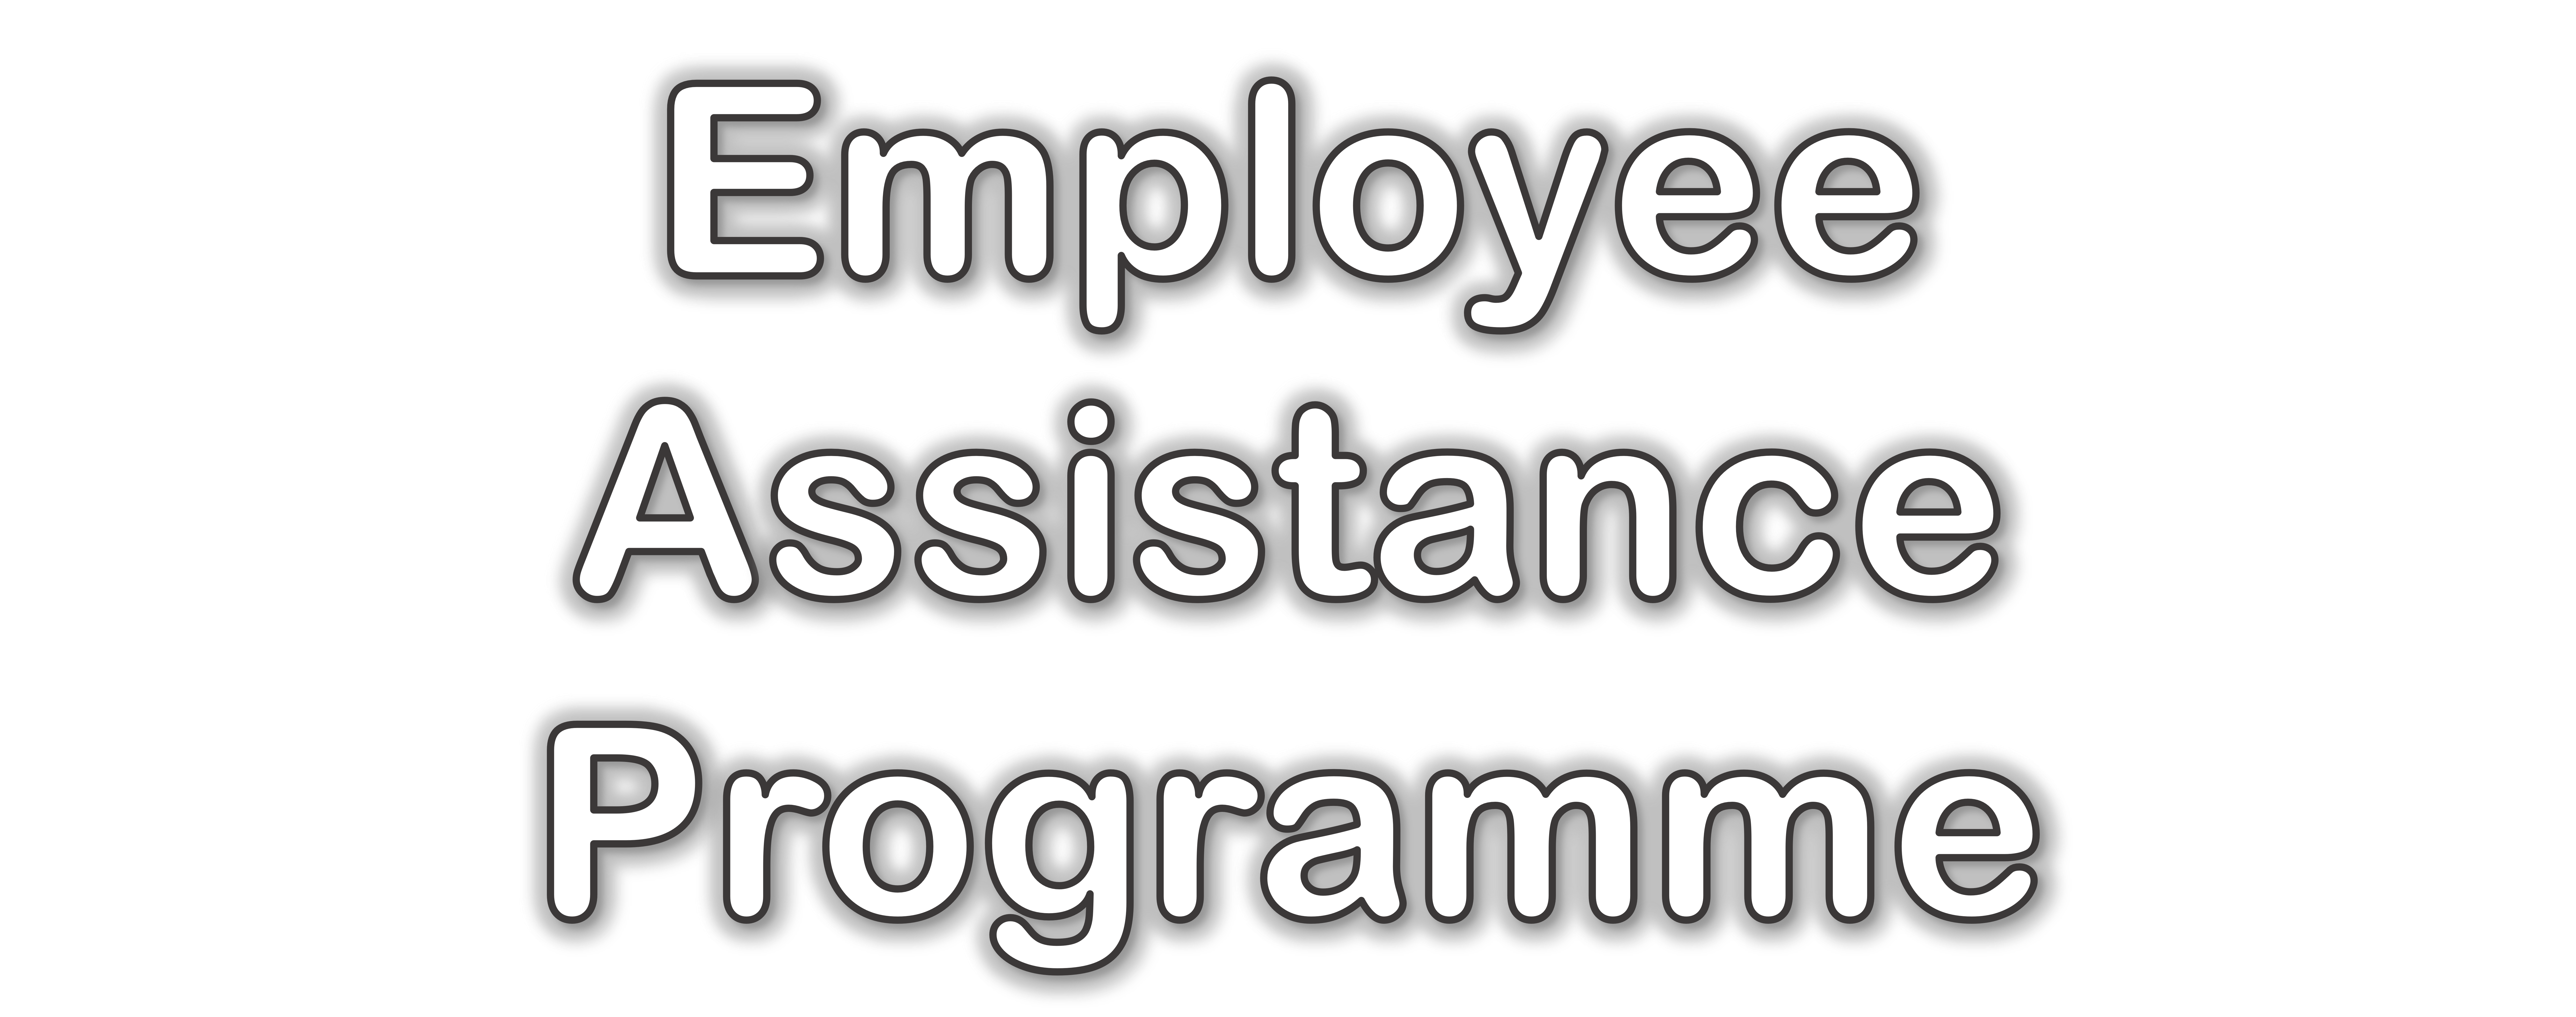 Employee Assistance Programme logo